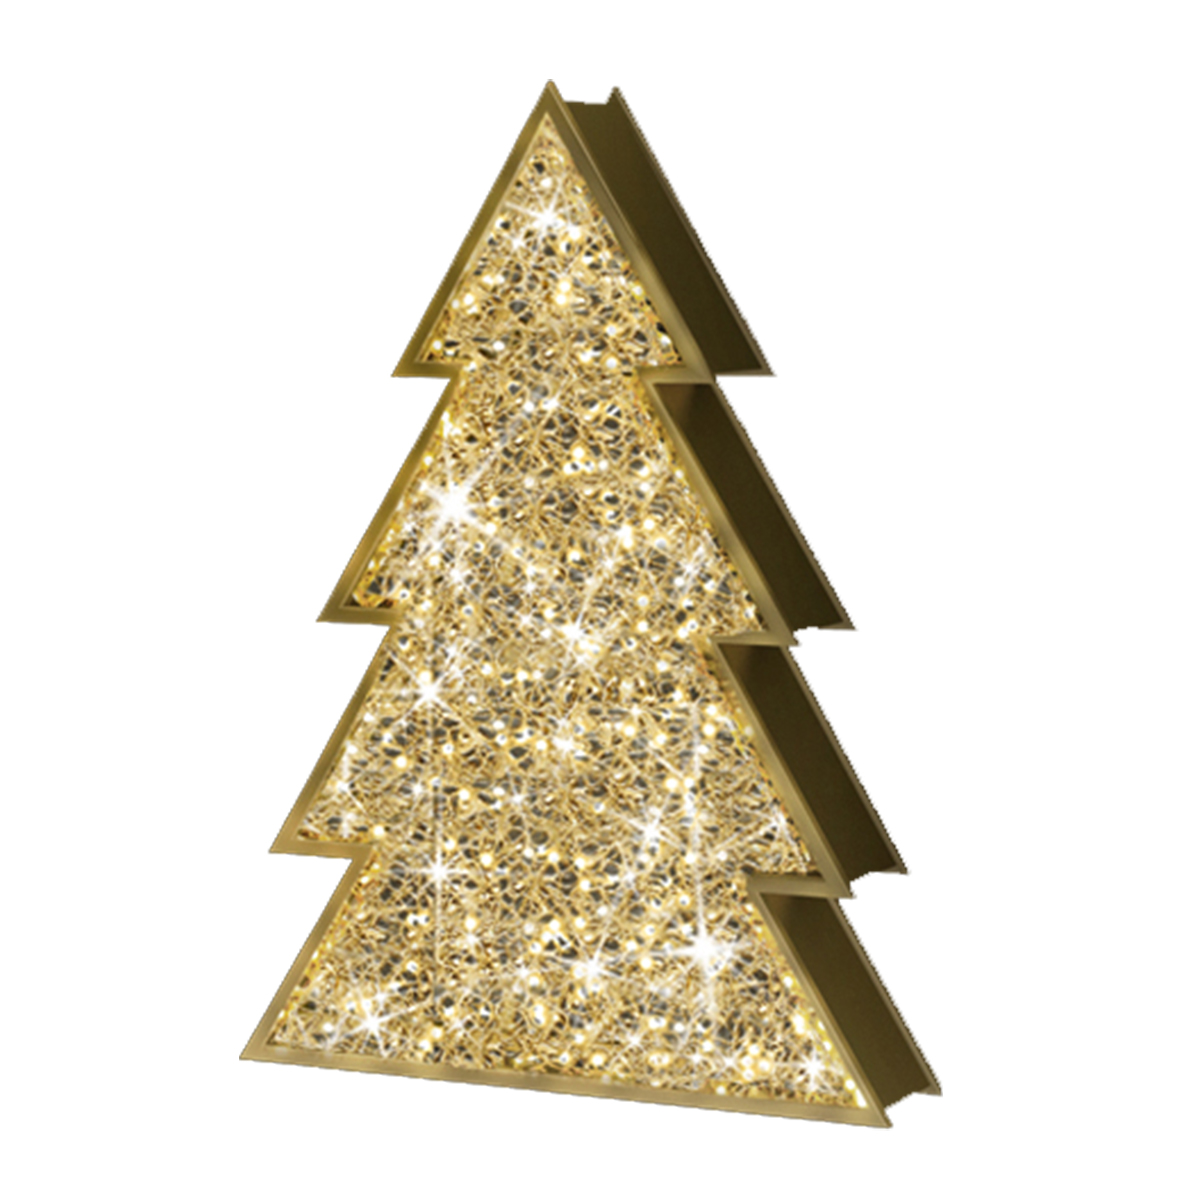 3D Christmas Tree Display - Medium - Lit by LED Lights - 6ft tall